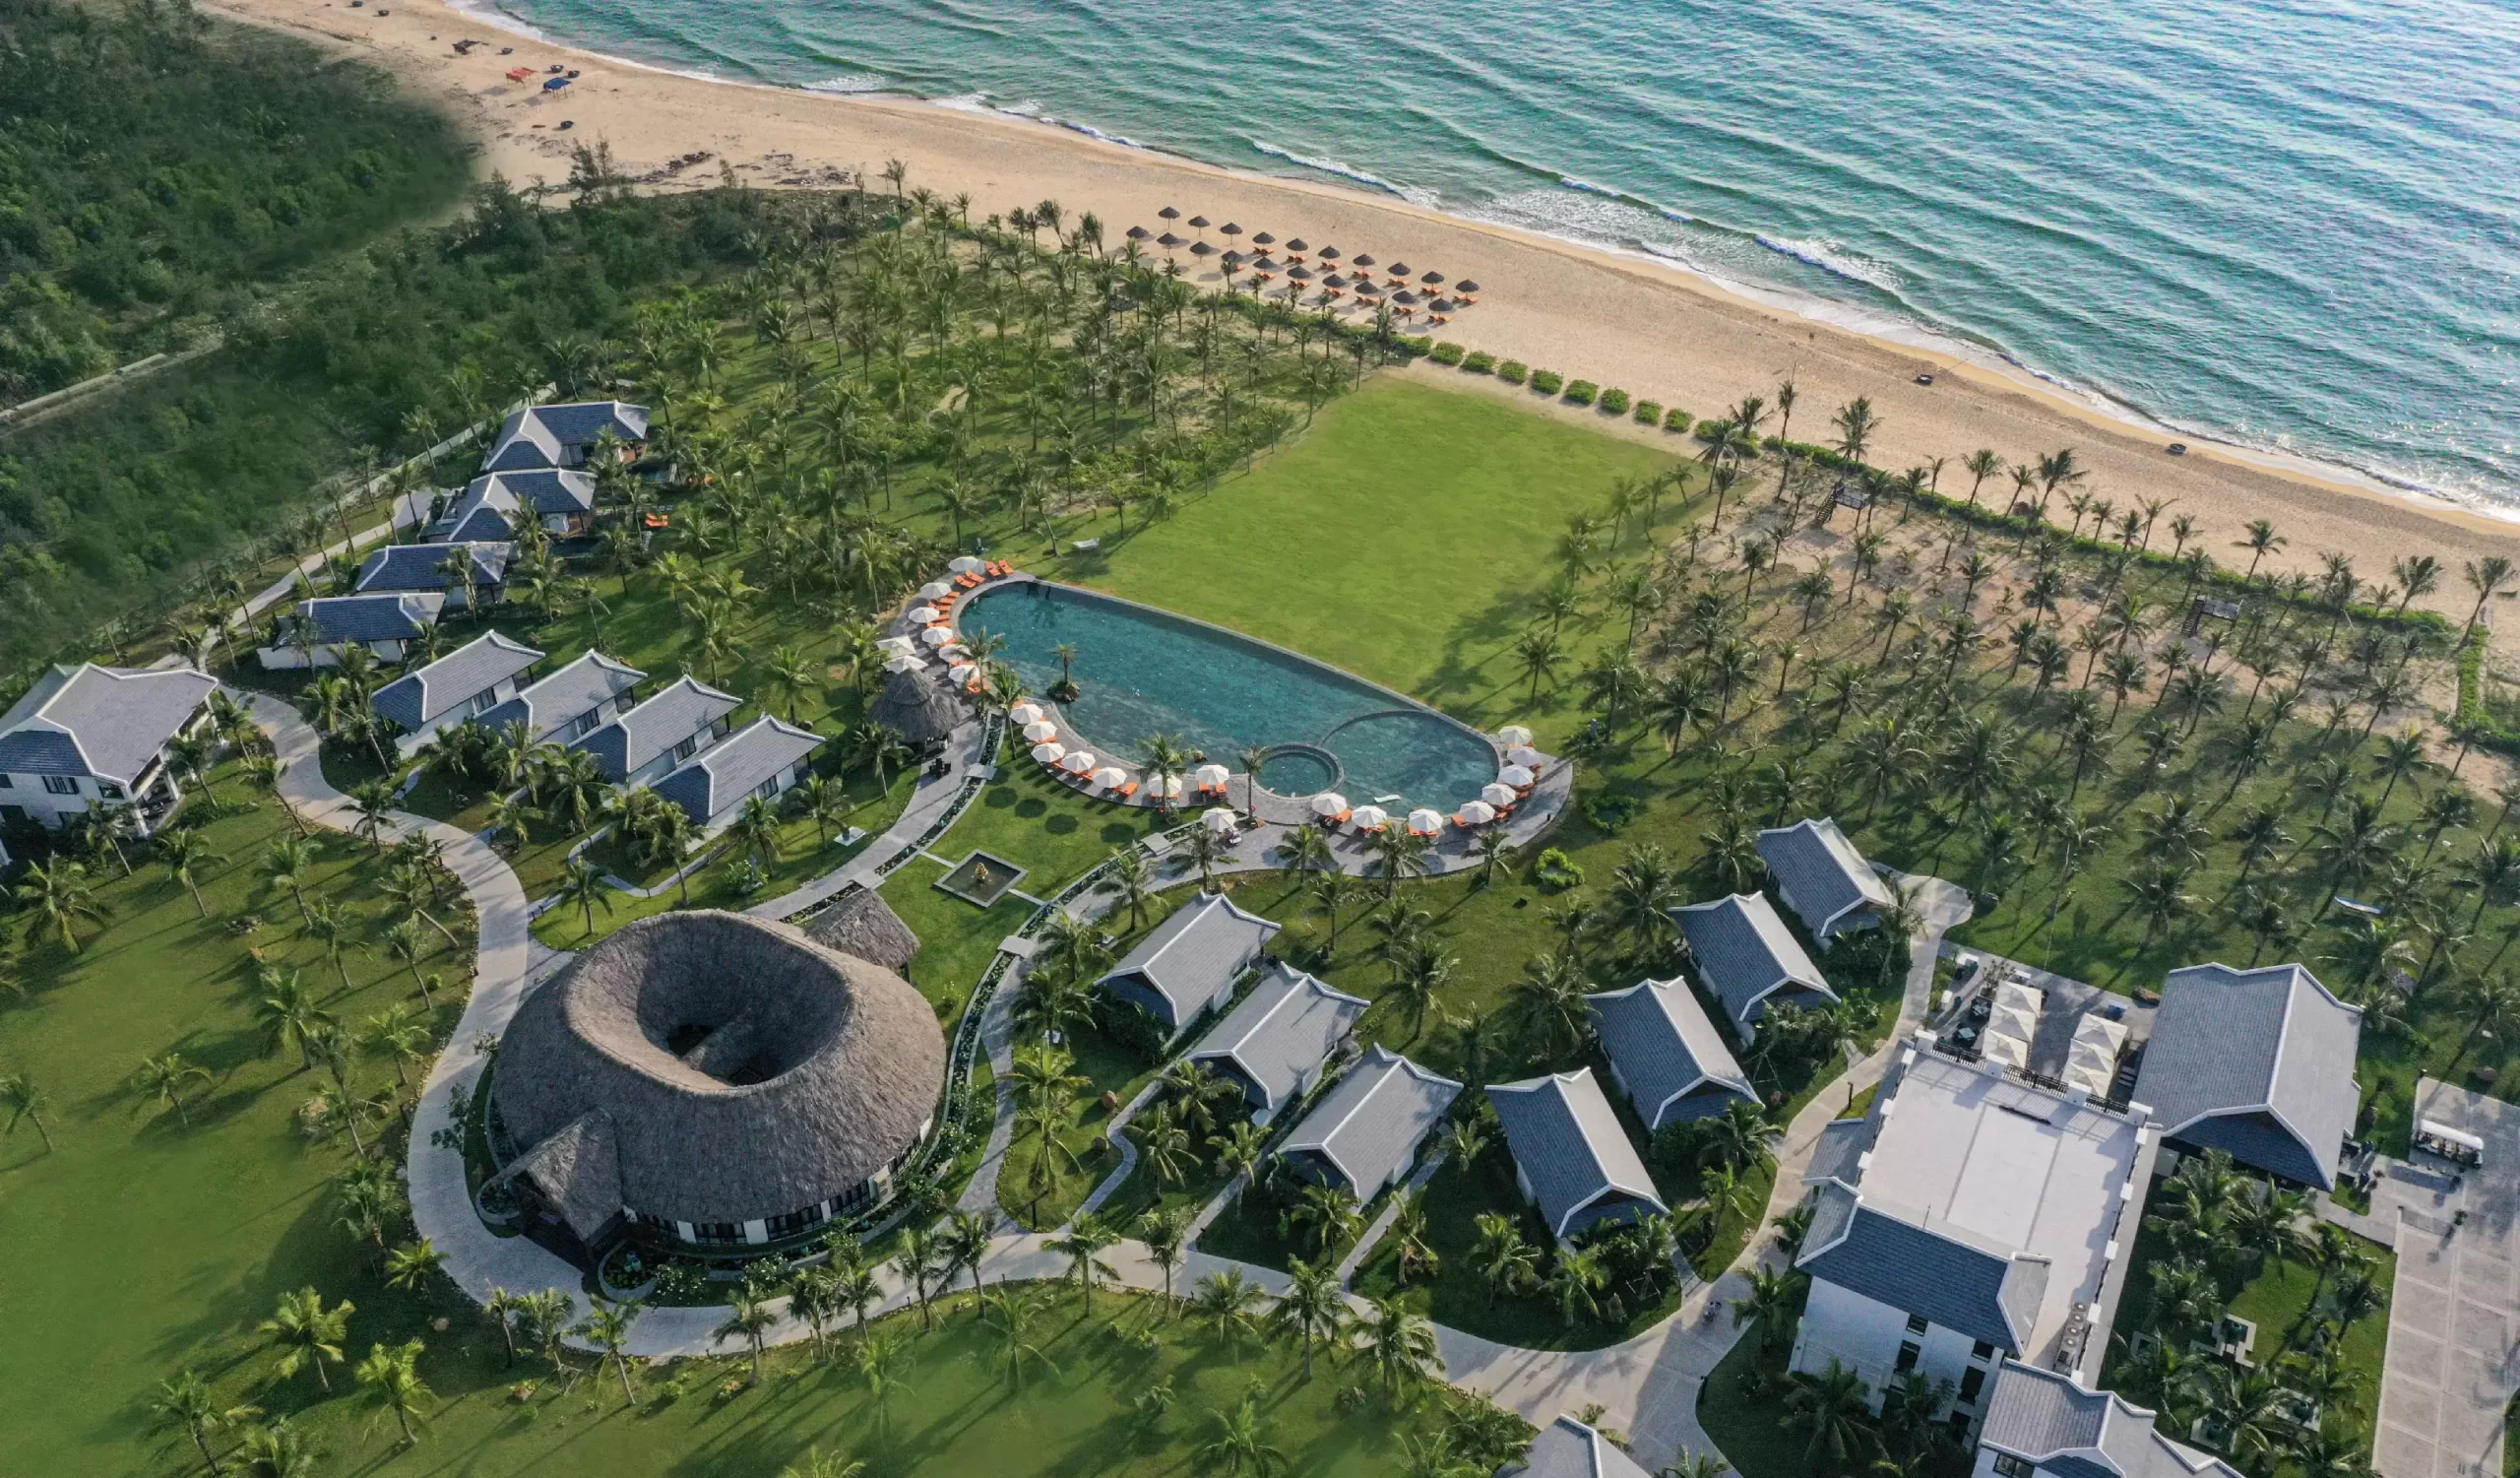 Bliss Hoi An Beach Resort & Wellness: Where Luxury Meets Sustainability